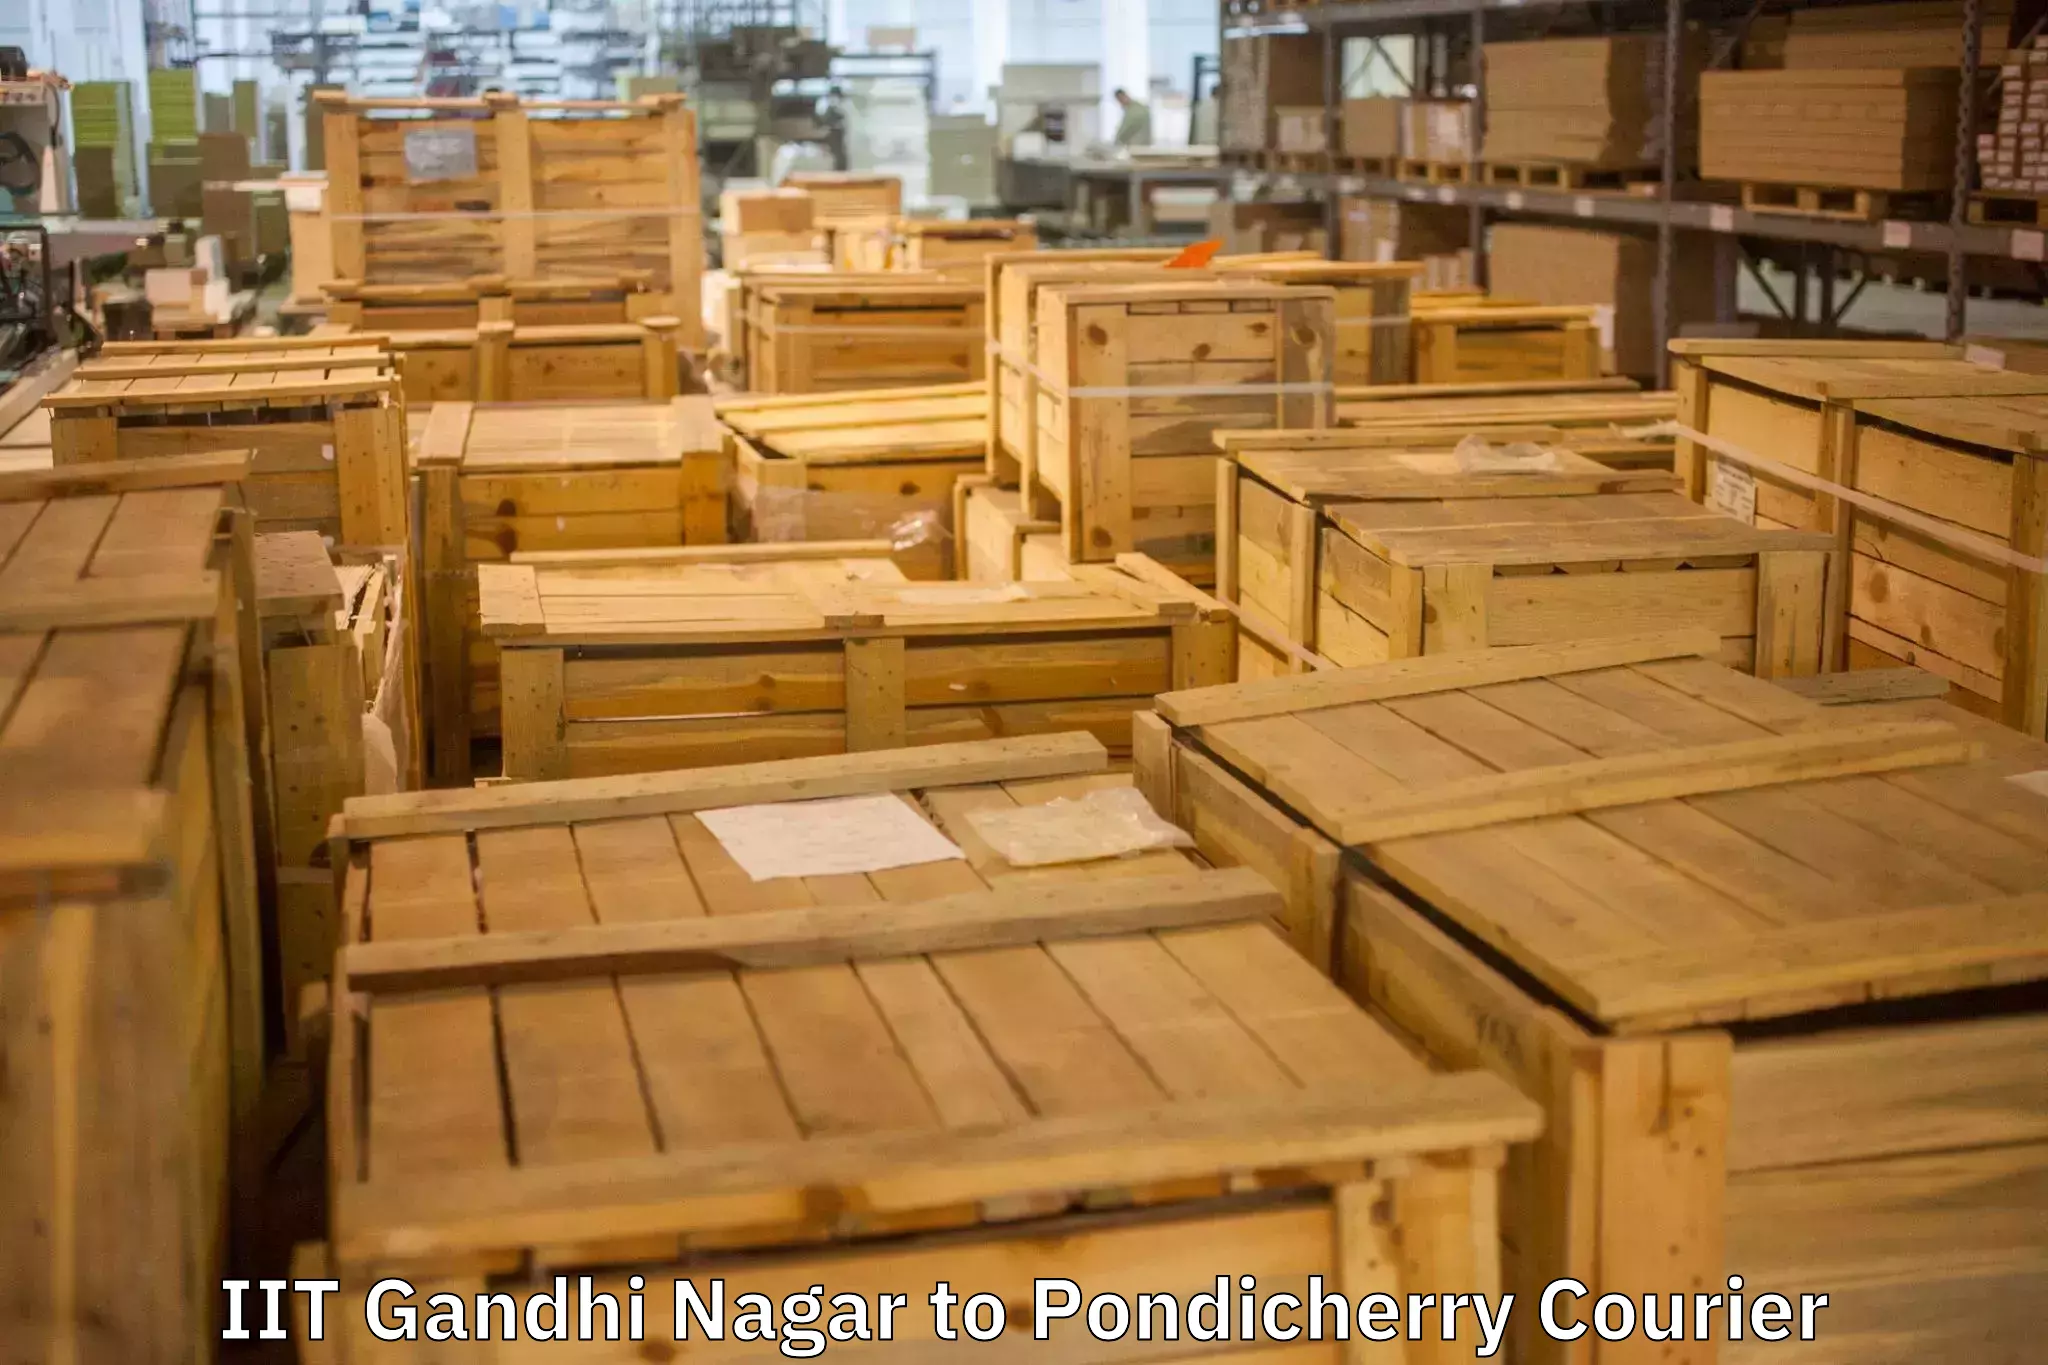 Moving and packing experts IIT Gandhi Nagar to Metttupalayam